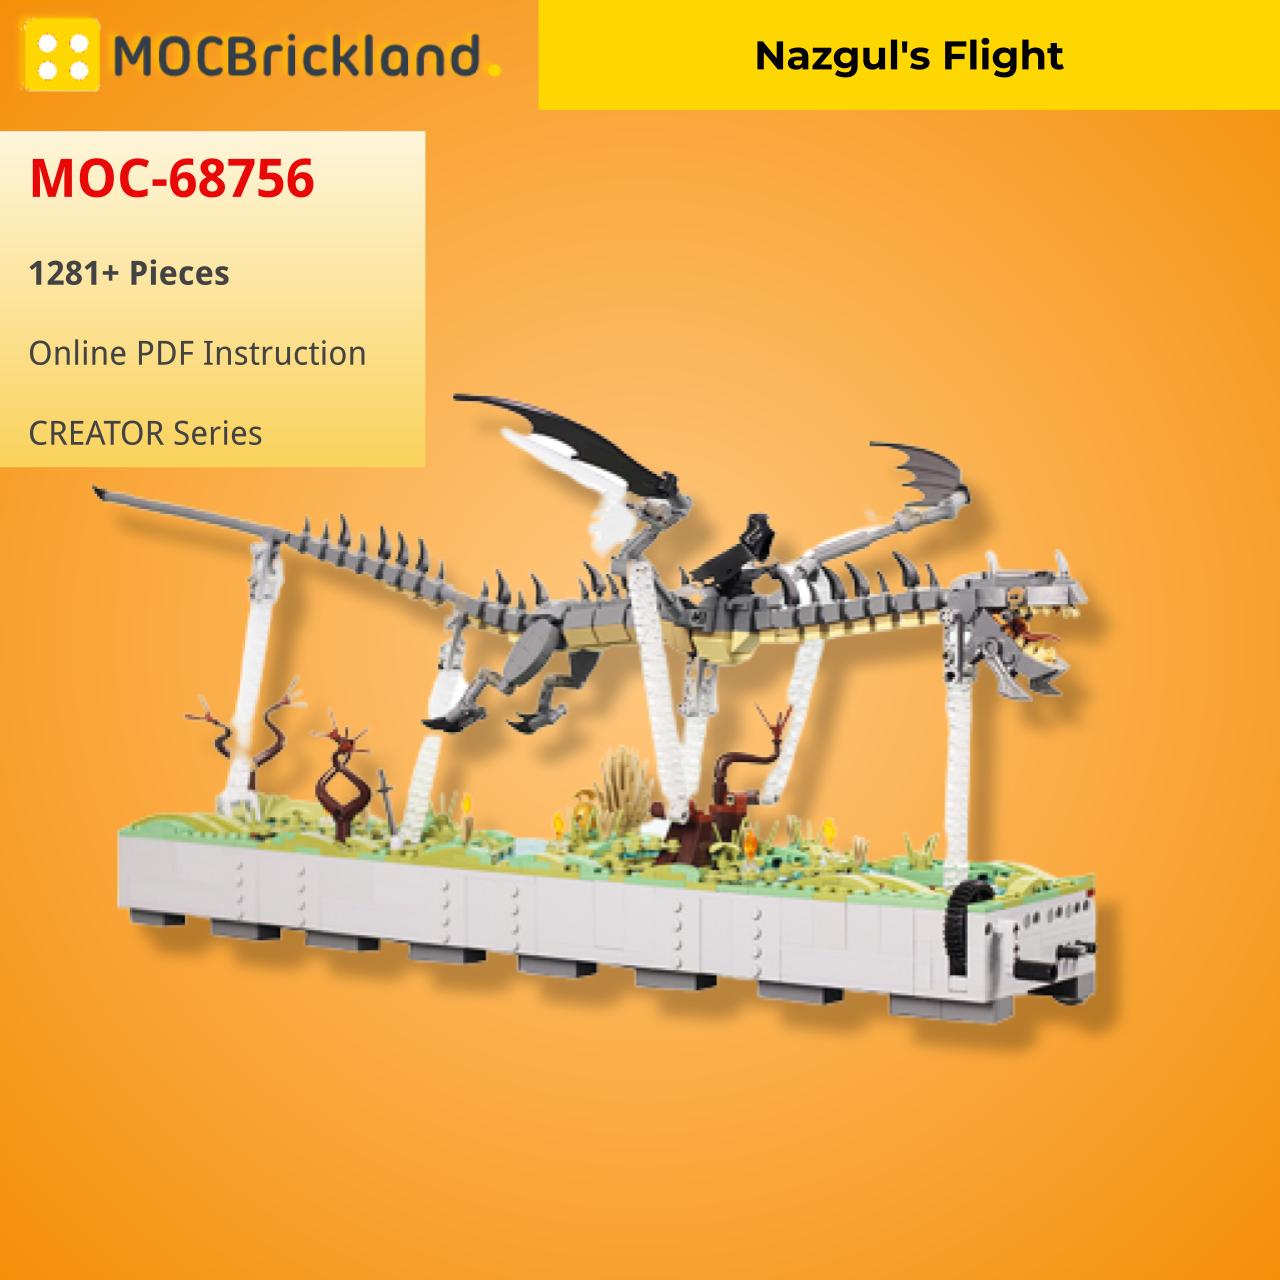 MOCBRICKLAND MOC-68756 Nazgul's Flight